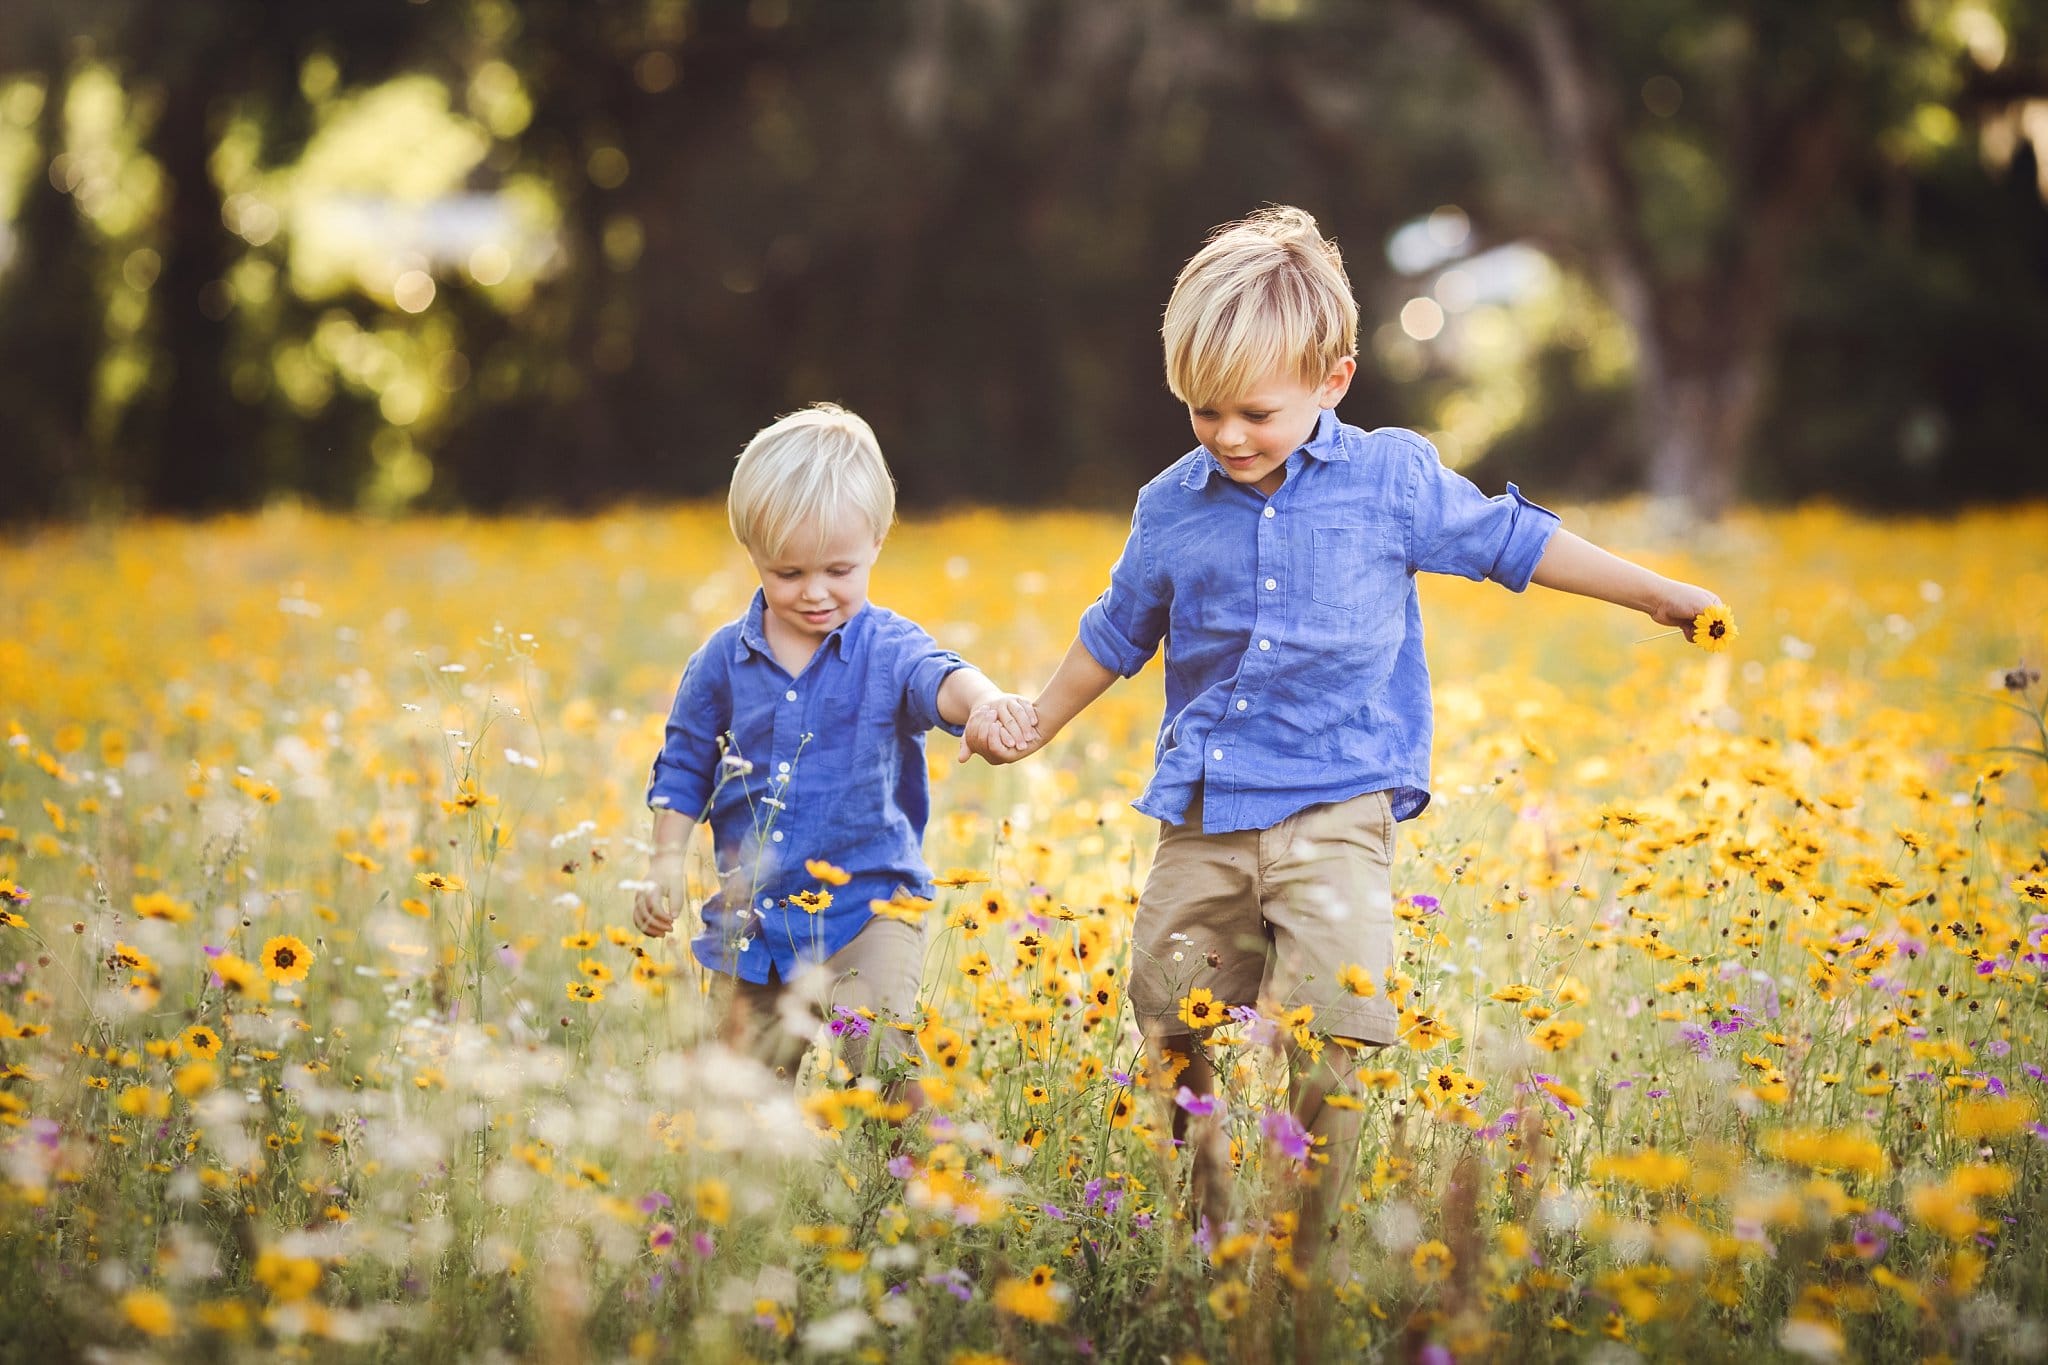 NE FL Family Photography brothers running through yellow flower field